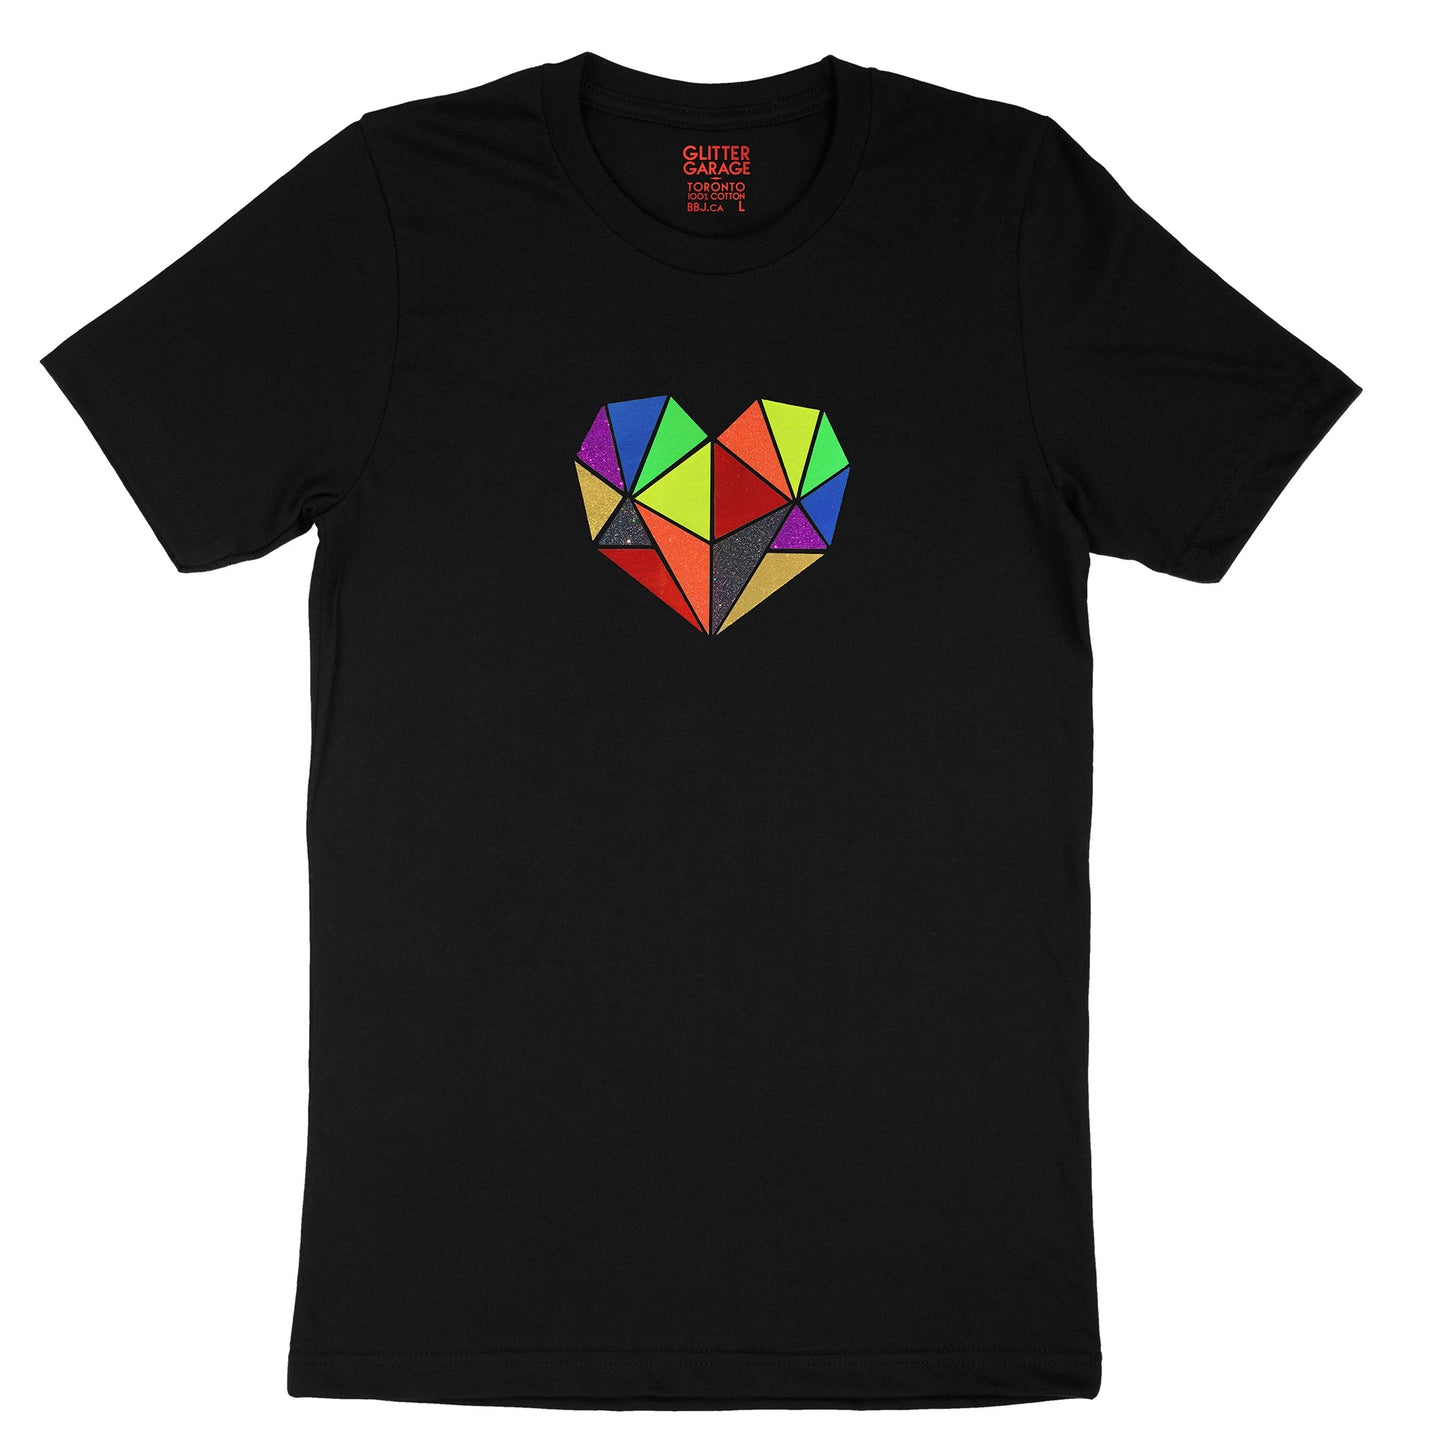 Vibrant rainbow faceted heart design with hand-applied neon, metallic and glitter vinyl on black unisex t-shirt - by BBJ / Glitter Garage